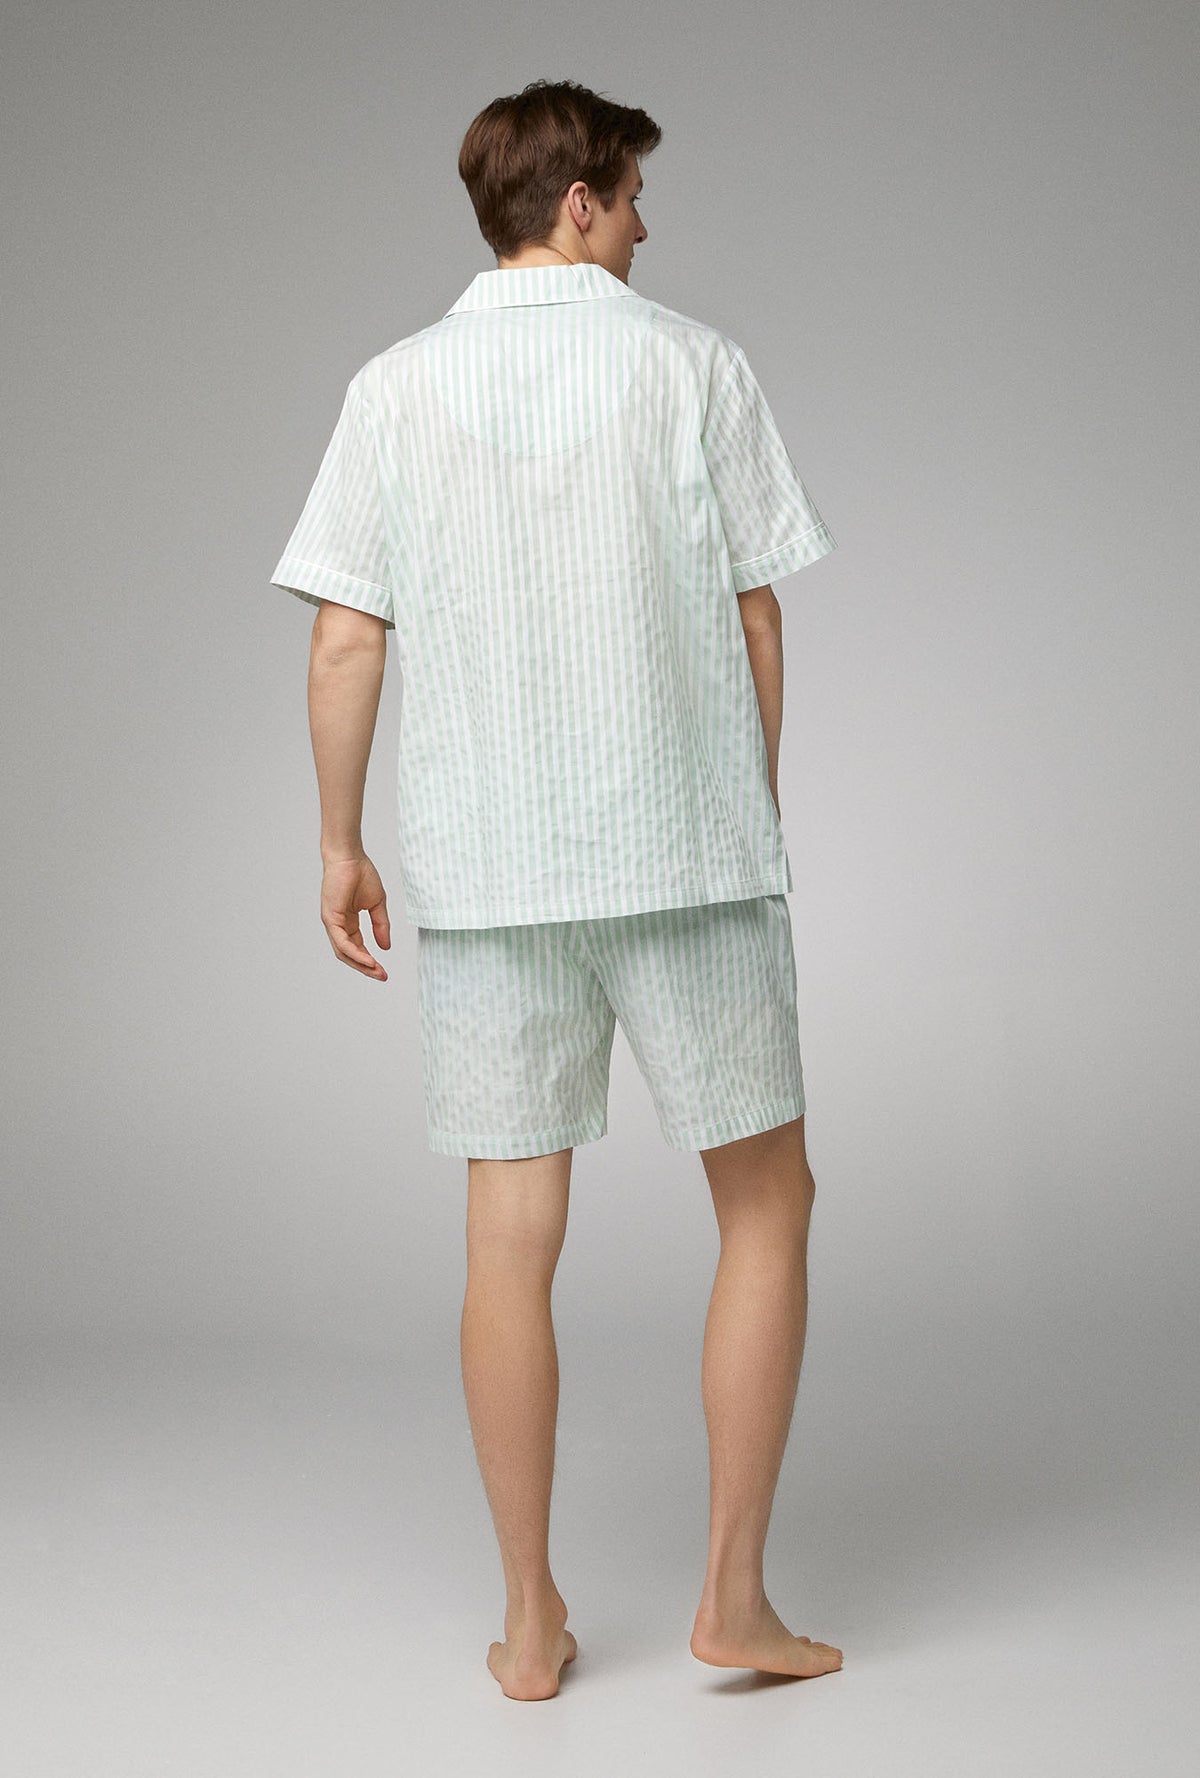 A men wearing  Short Sleeve Notch Woven Cotton Poplin Short PJ Set with Mint 3D Stripe print